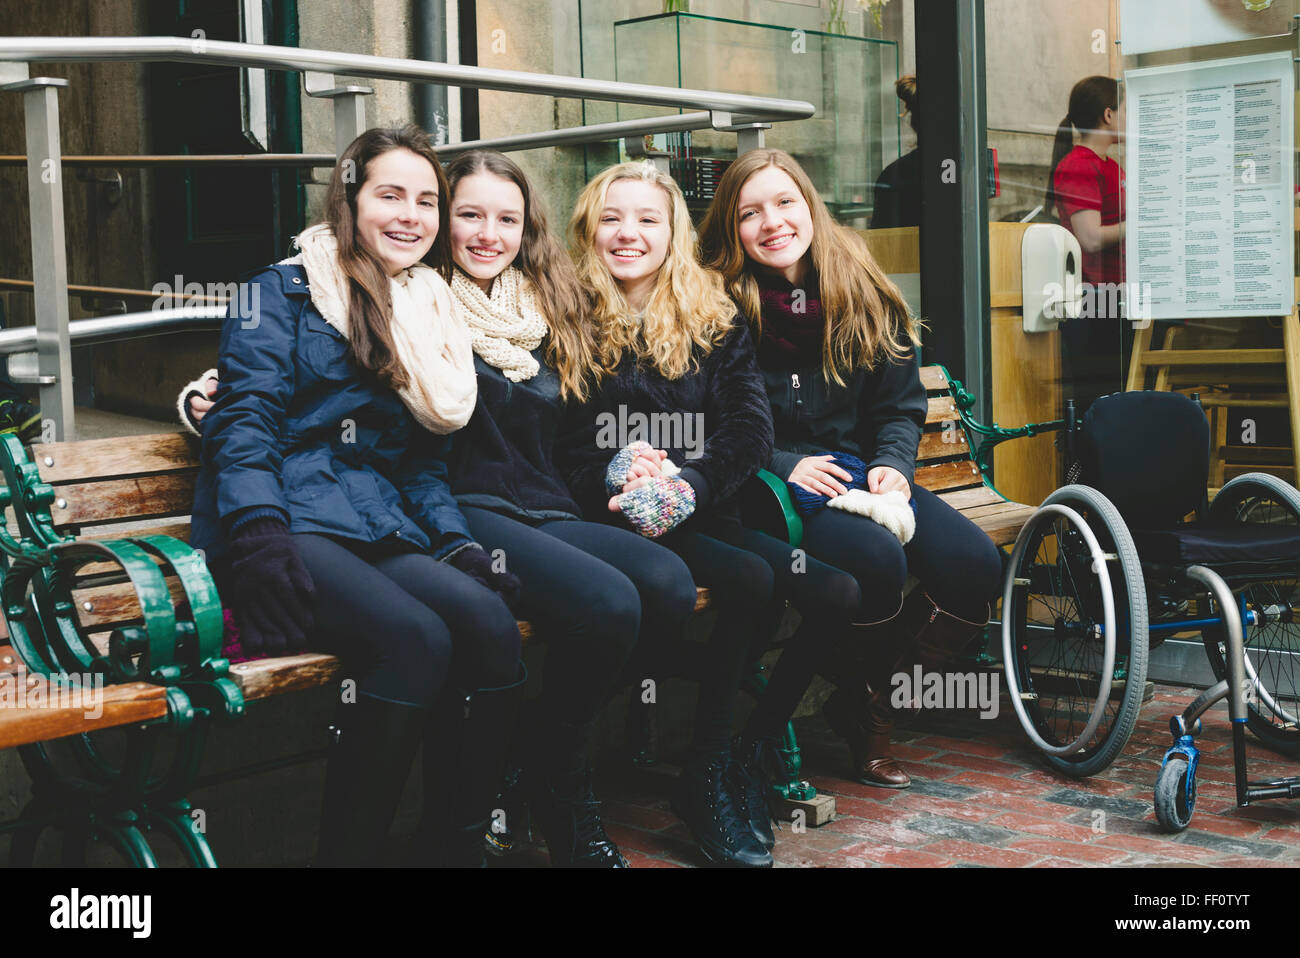 Teenage Girls smiling on bench Banque D'Images